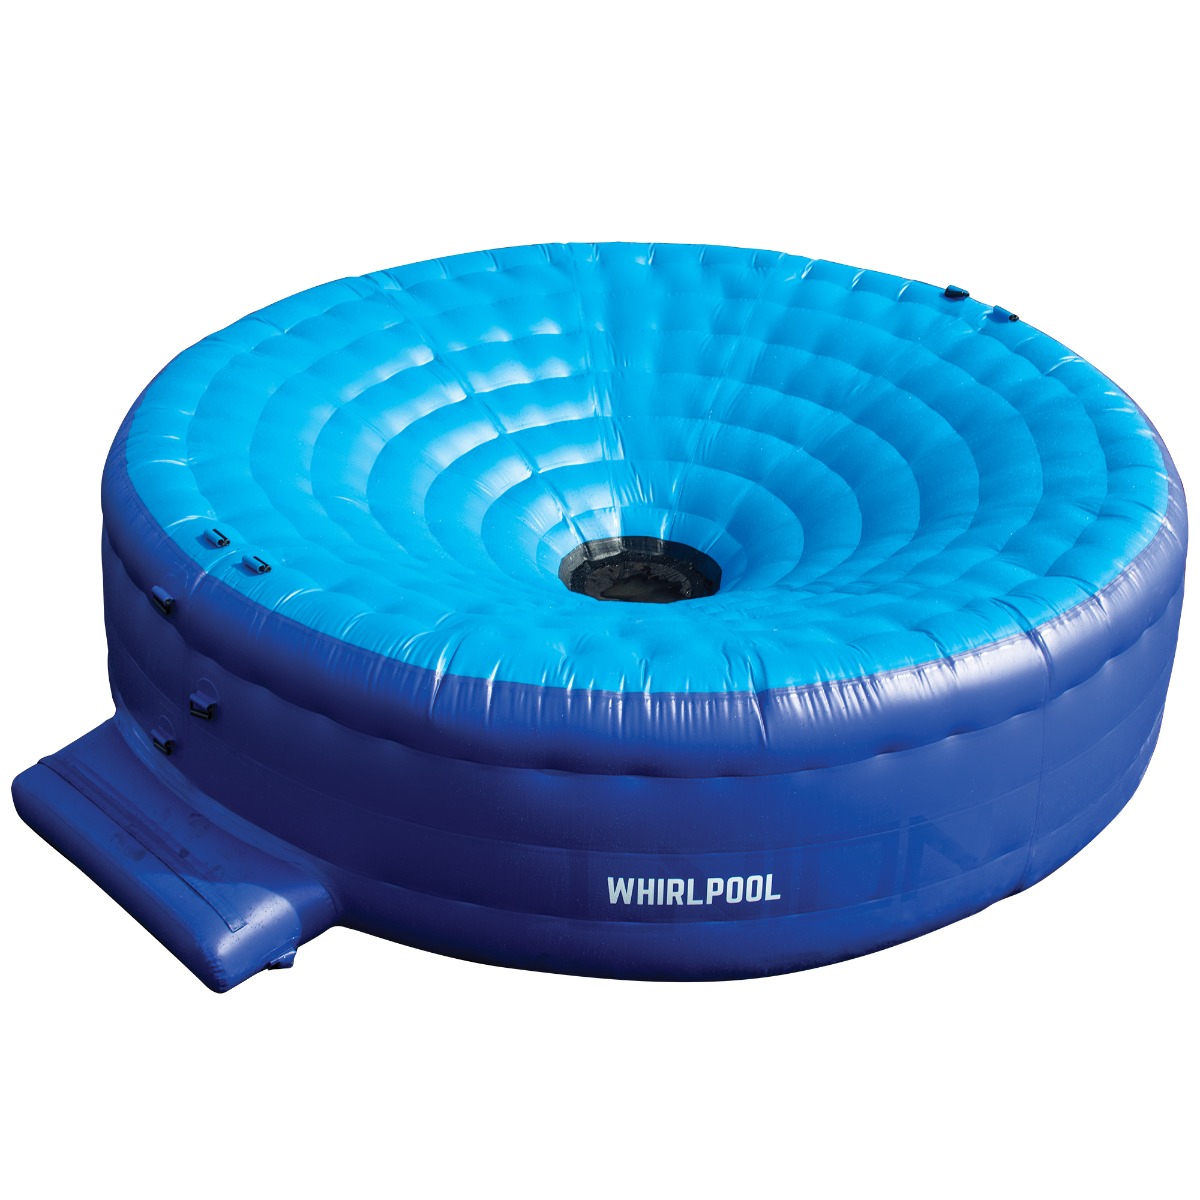 User Manual: Union Aquaparks Whirlpool